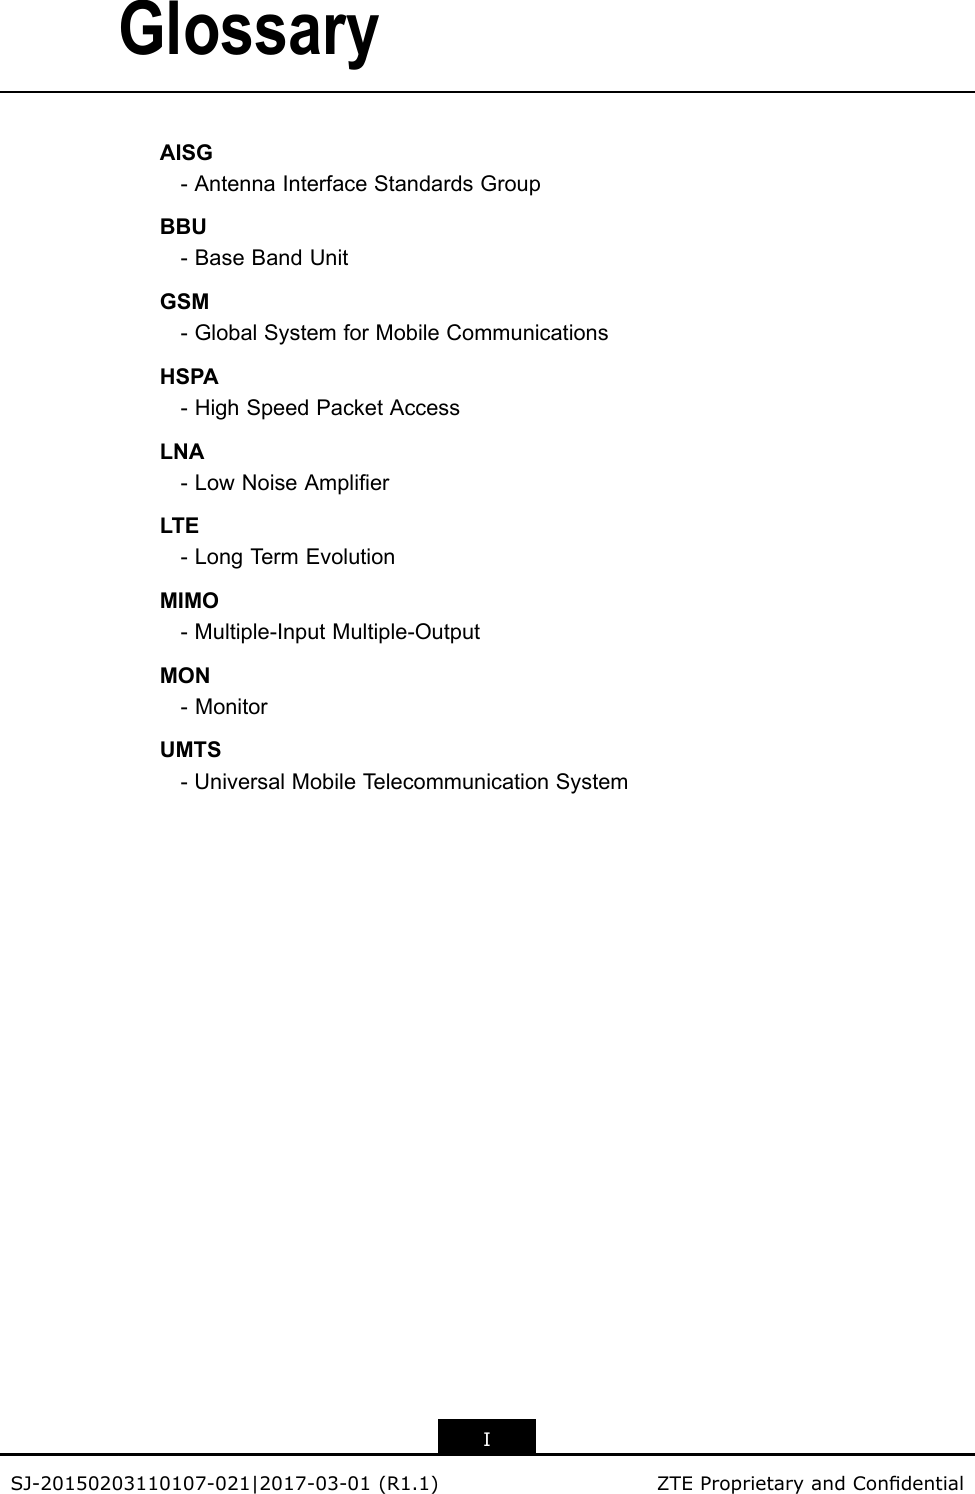 GlossaryAISG-AntennaInterfaceStandardsGroupBBU-BaseBandUnitGSM-GlobalSystemforMobileCommunicationsHSPA-HighSpeedPacketAccessLNA-LowNoiseAmplierLTE-LongTermEvolutionMIMO-Multiple-InputMultiple-OutputMON-MonitorUMTS-UniversalMobileTelecommunicationSystemISJ-20150203110107-021|2017-03-01(R1.1)ZTEProprietaryandCondential